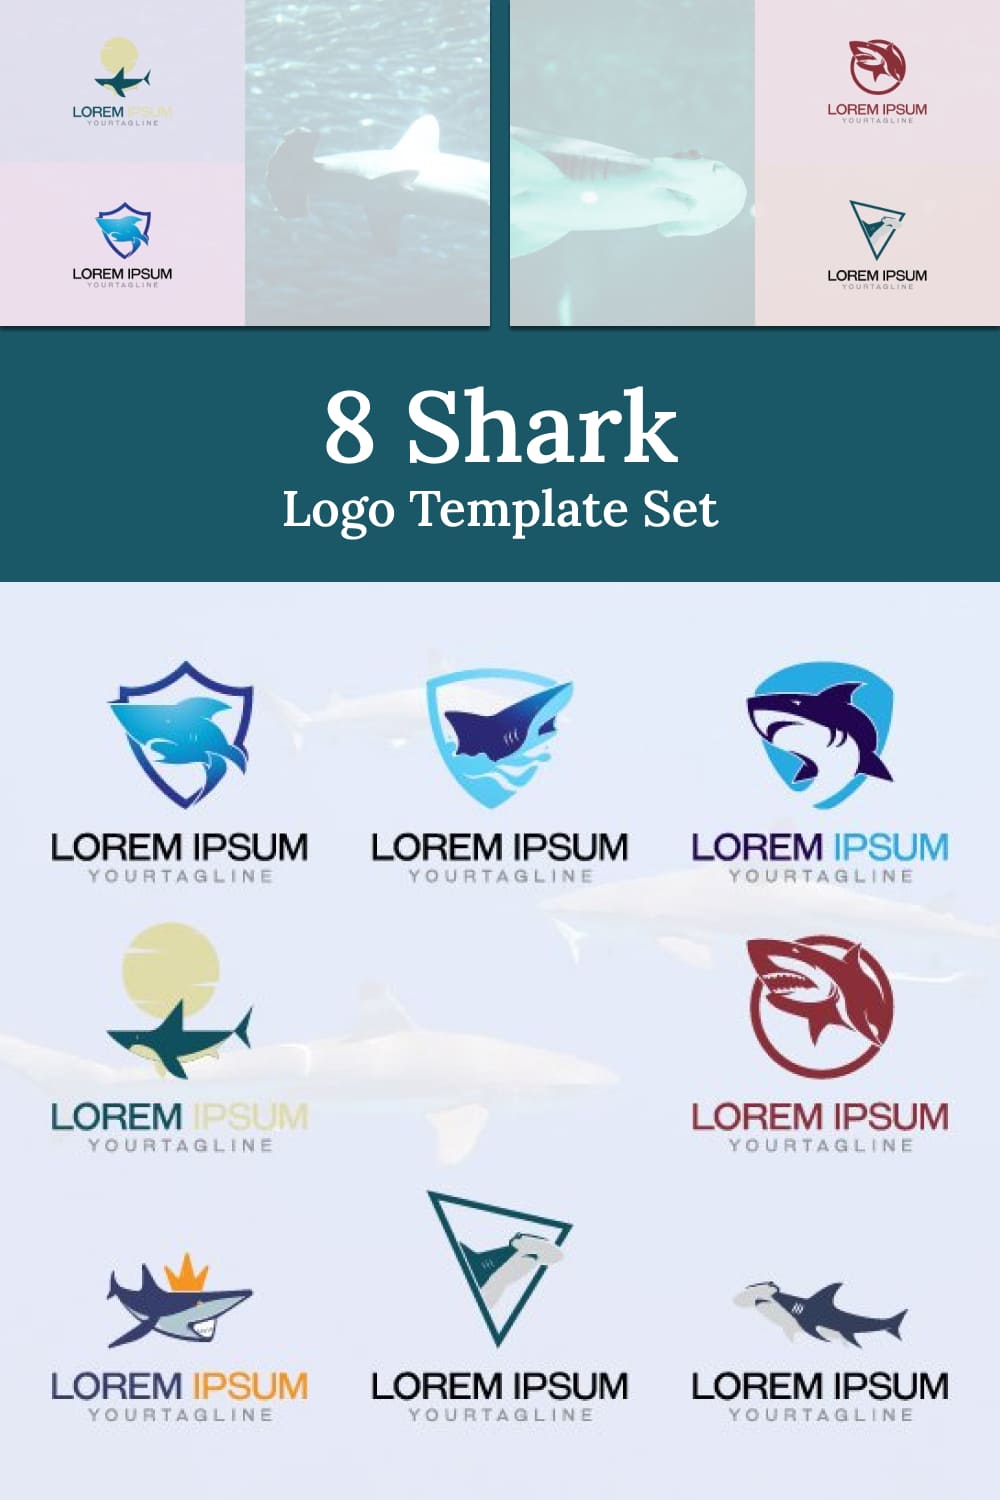 8 shark logo template set - pinterest image preview.